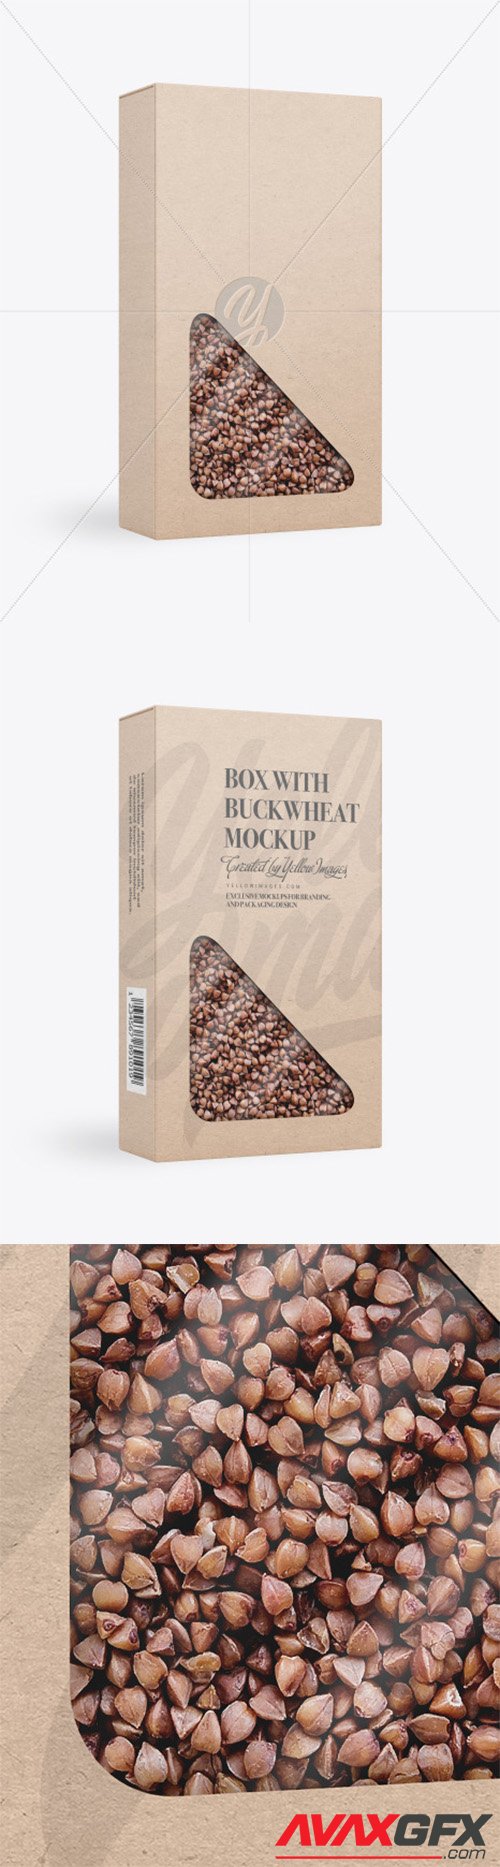 Kraft Paper Box with Buckwheat Mockup 78414 TIF